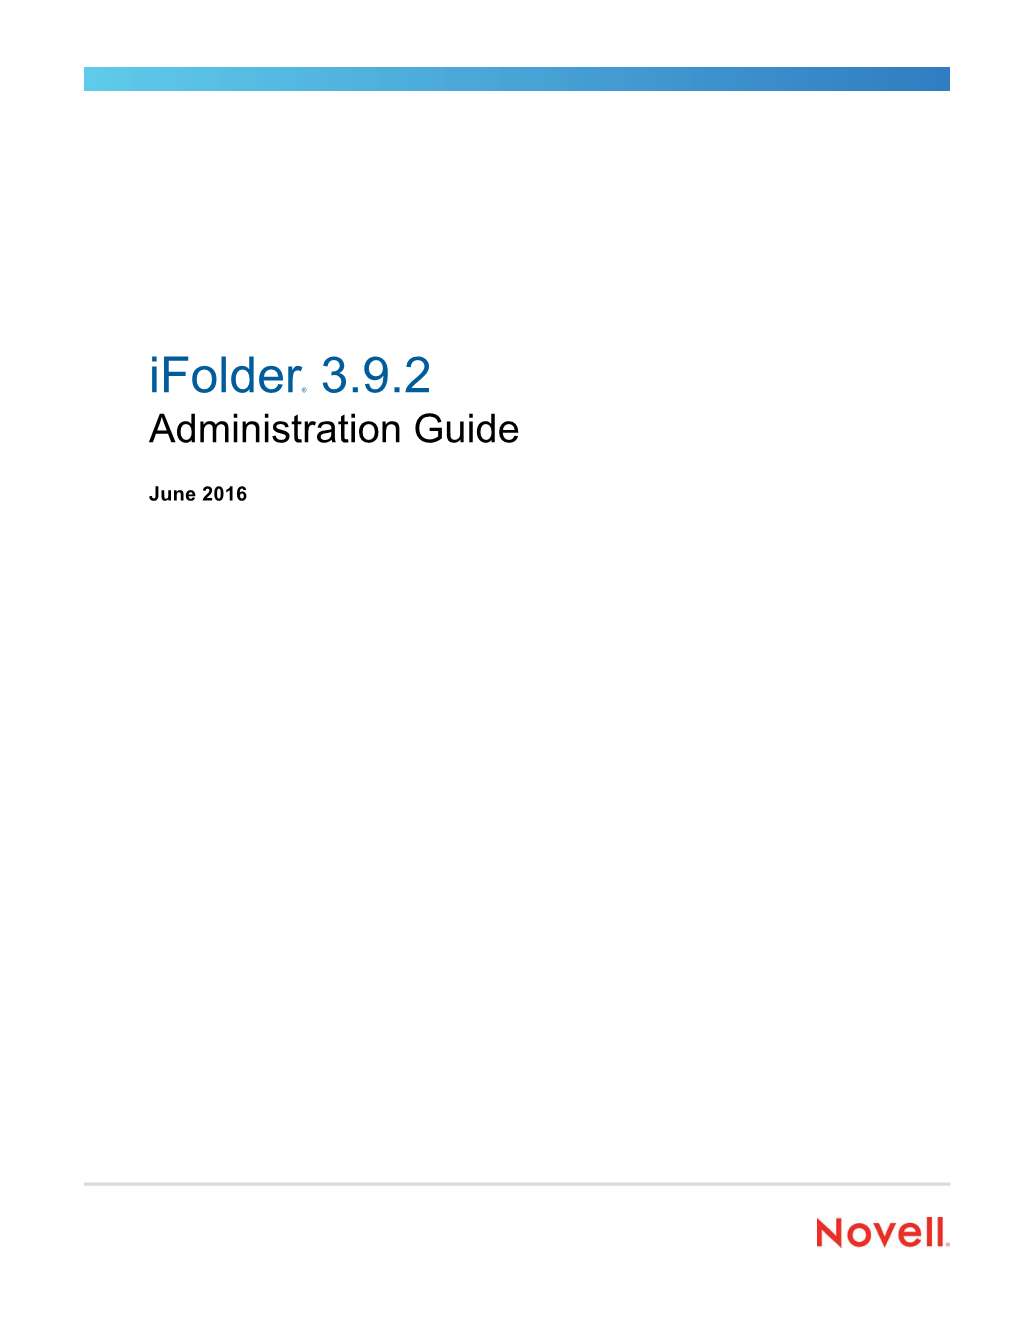 Novell Ifolder 3.9.2 Administration Guide, Visit the Novell Ifolder 3.X Documentation Web Site (